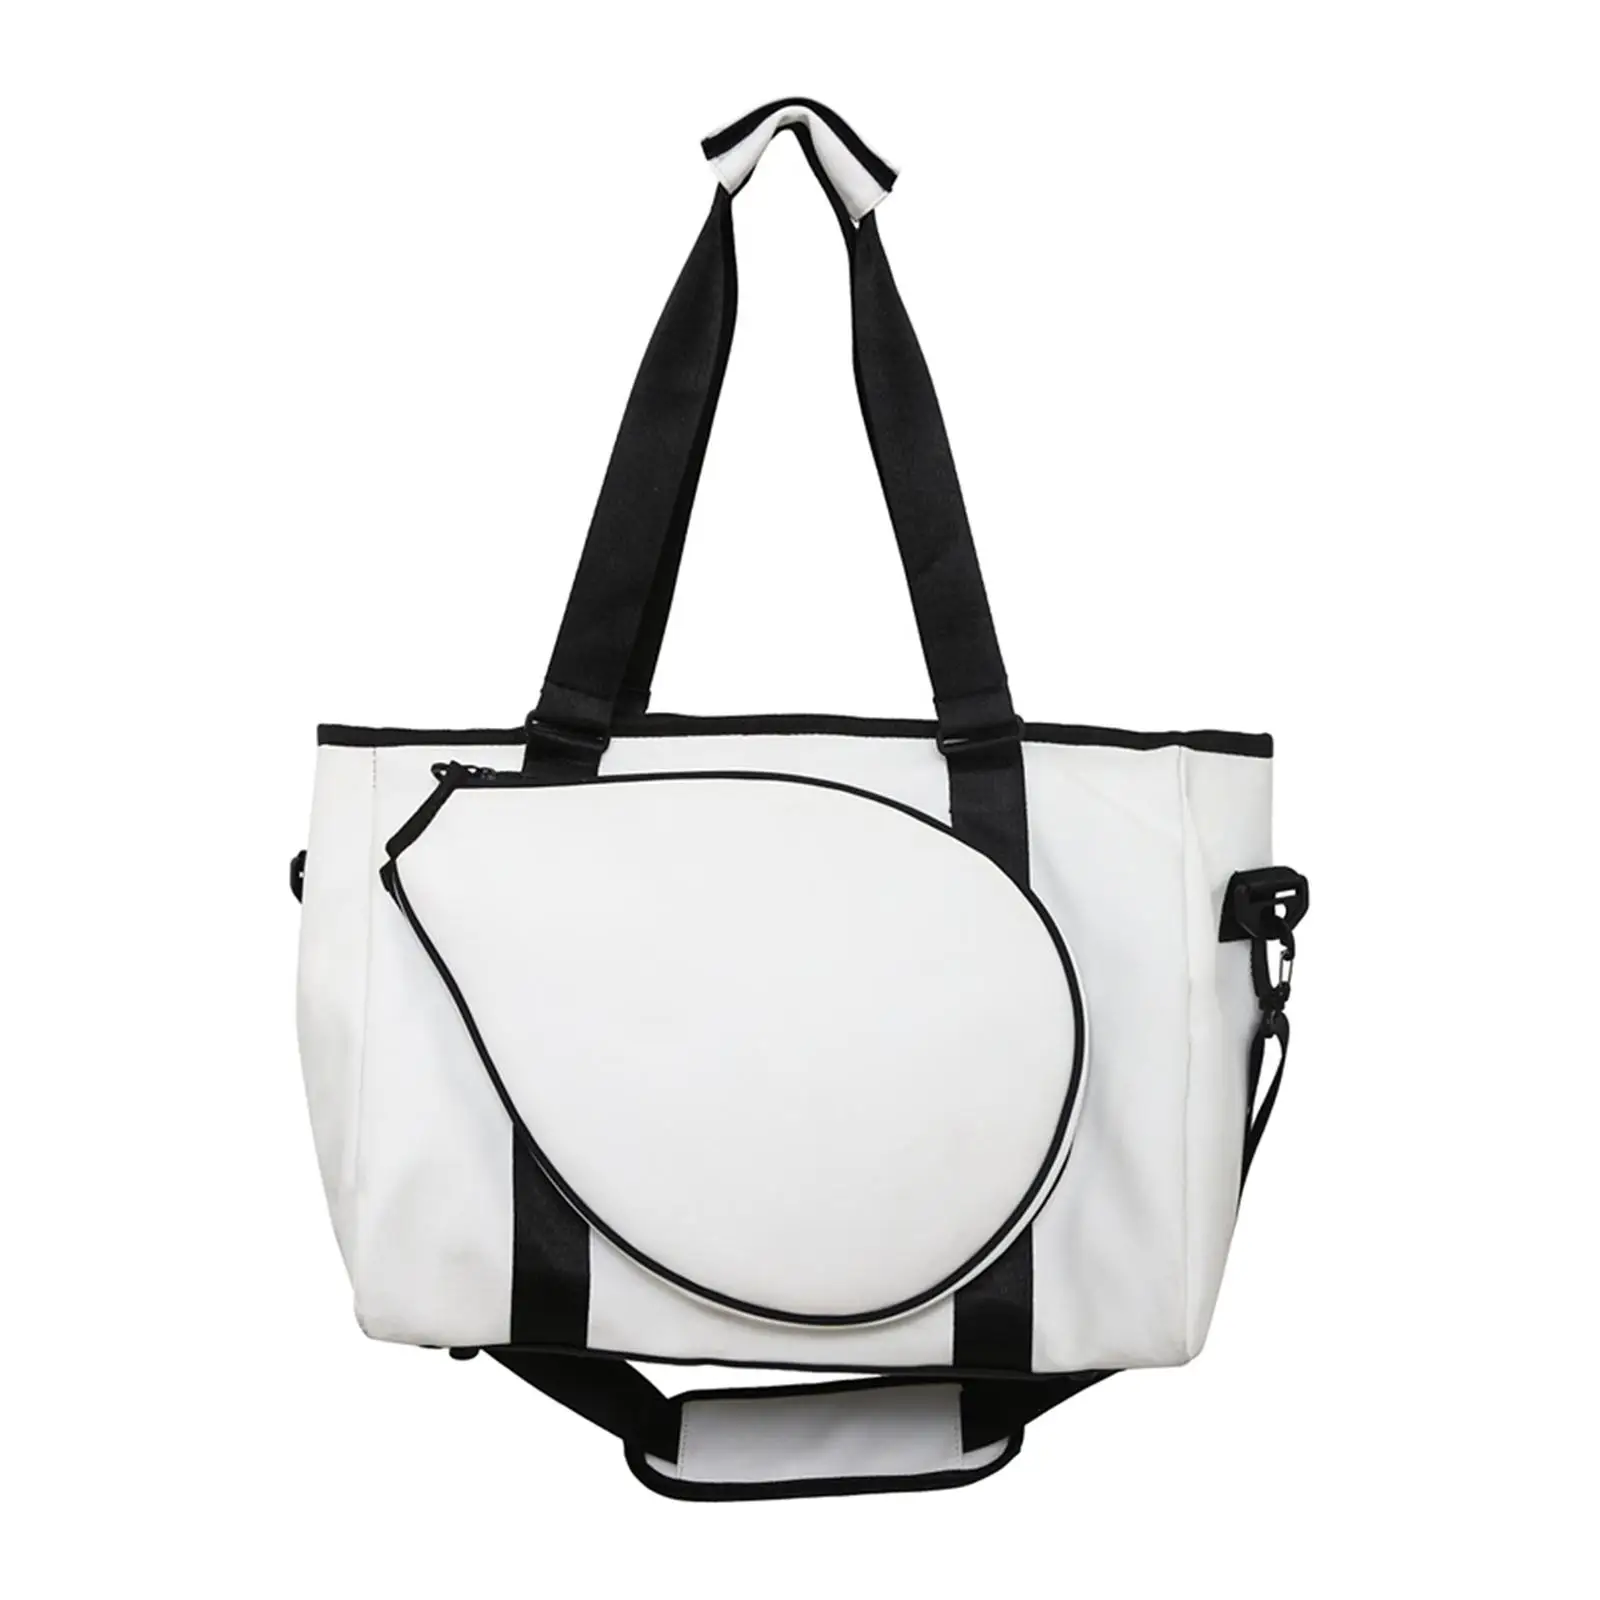 Tennis Shoulder Bag Carrying Bag Multifunctional with Zipper Handbag for Squash Racquets Pickleball Clothes Equipment